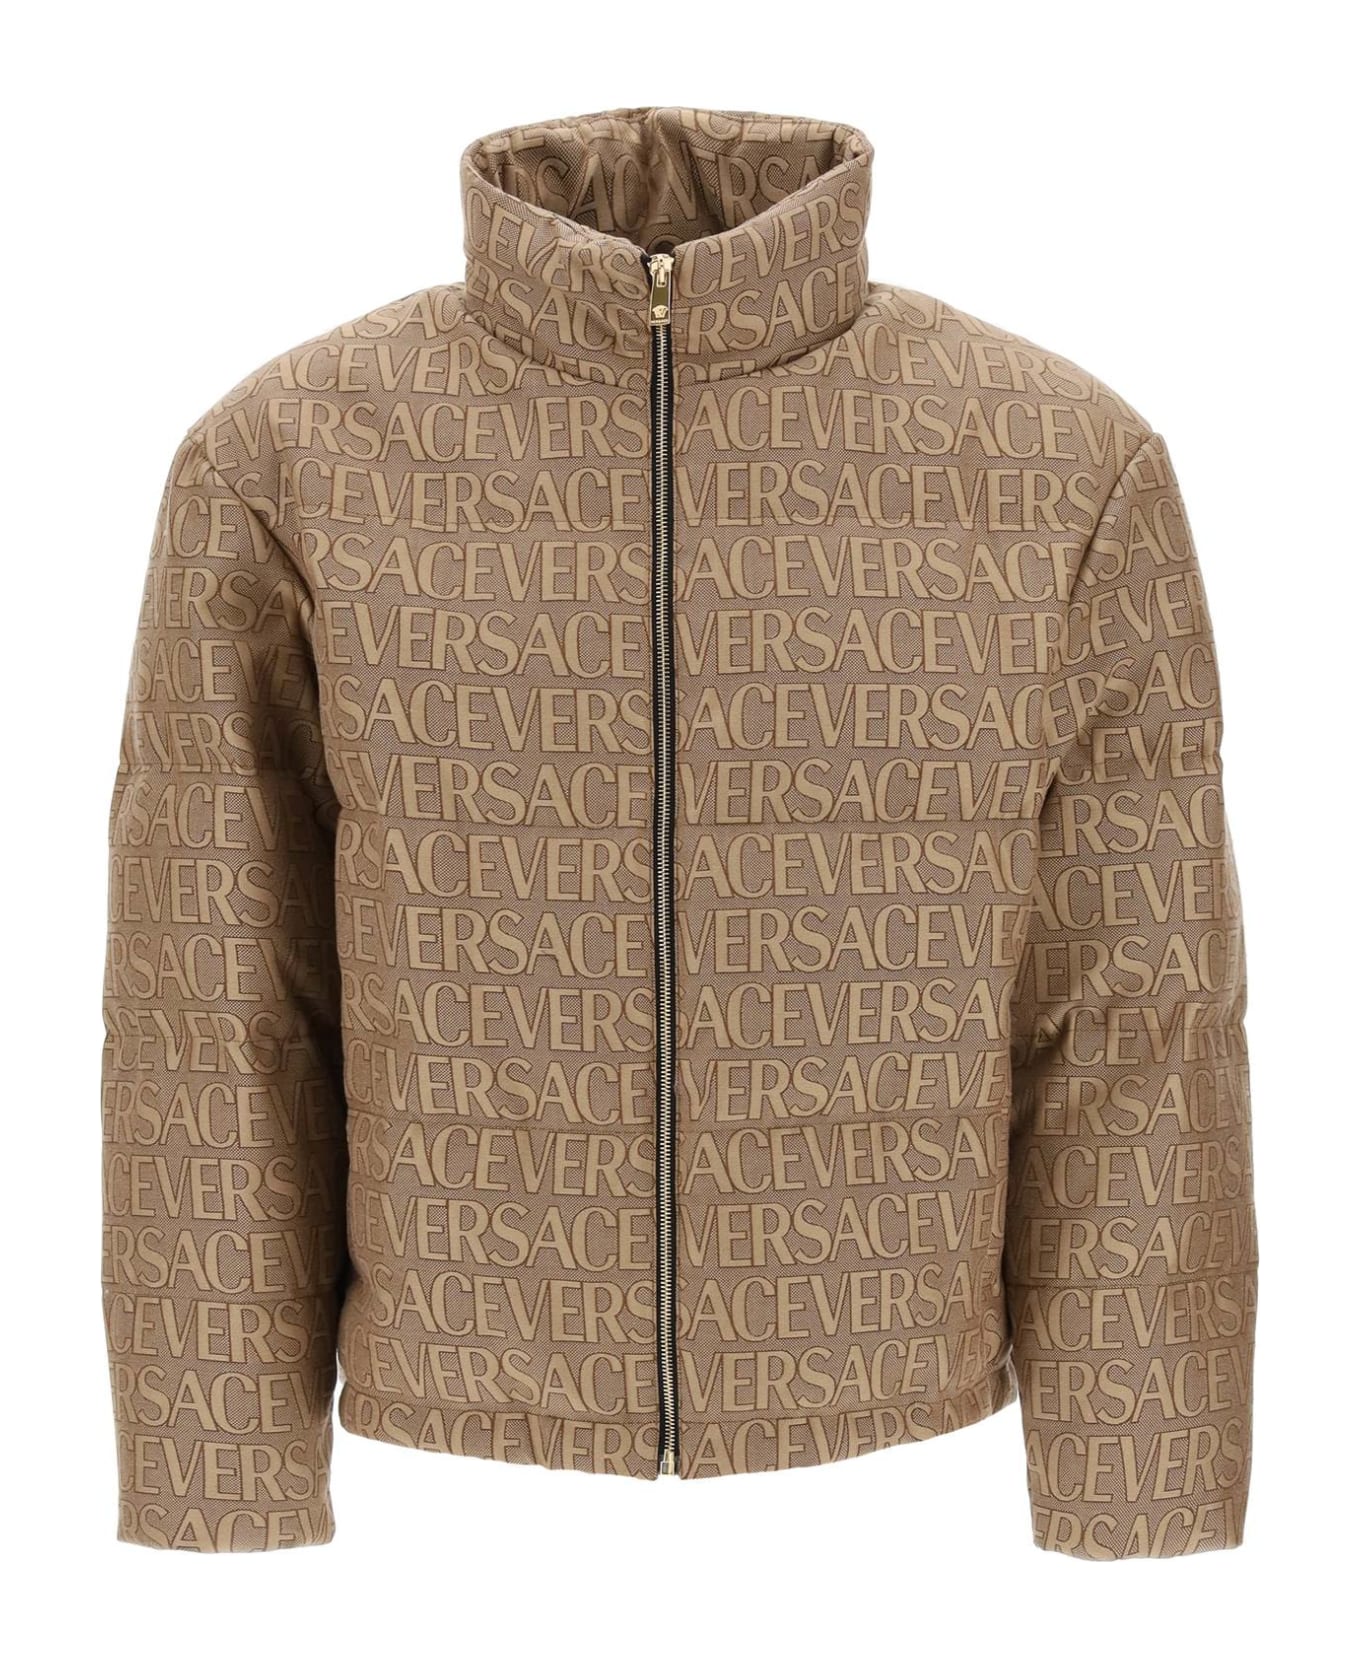 Versace Canvas Puffer Jacket - Beige